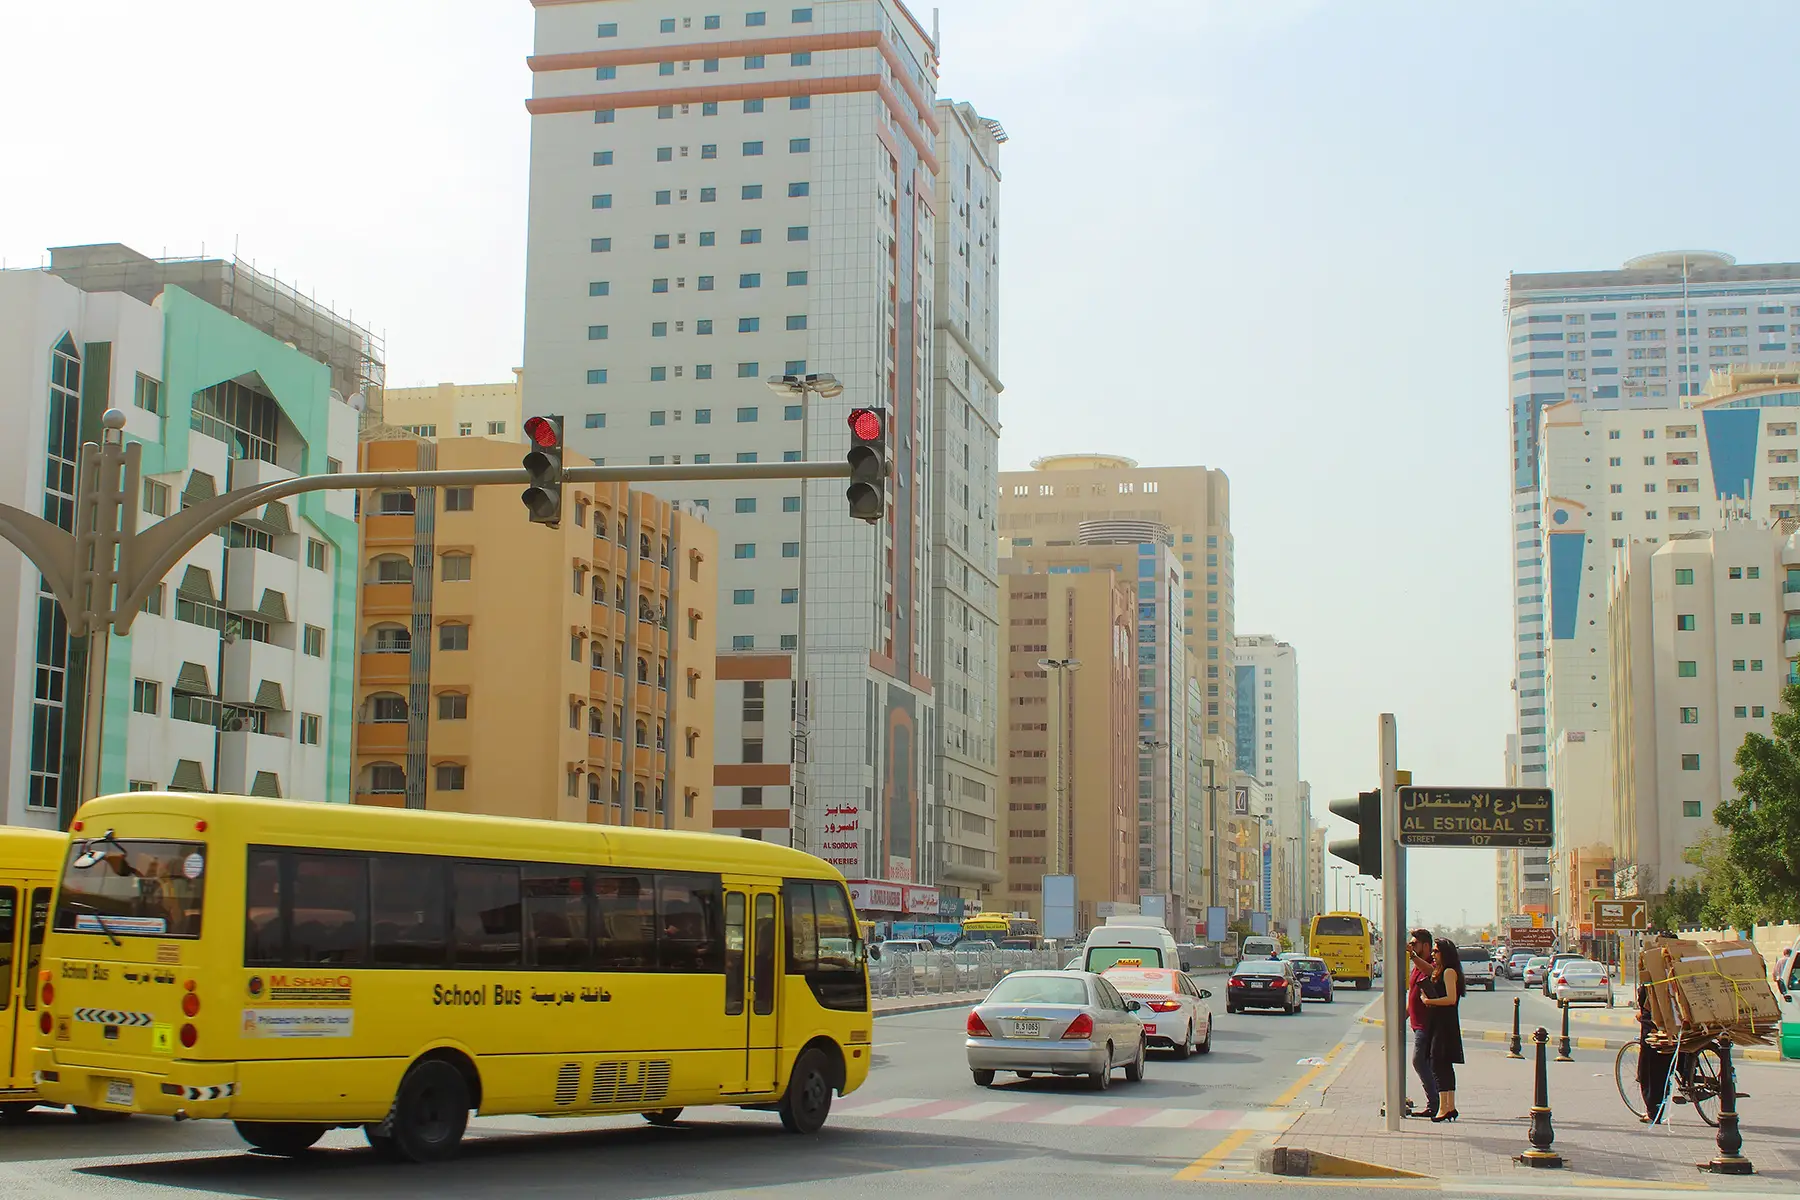 School bus in Sharjah